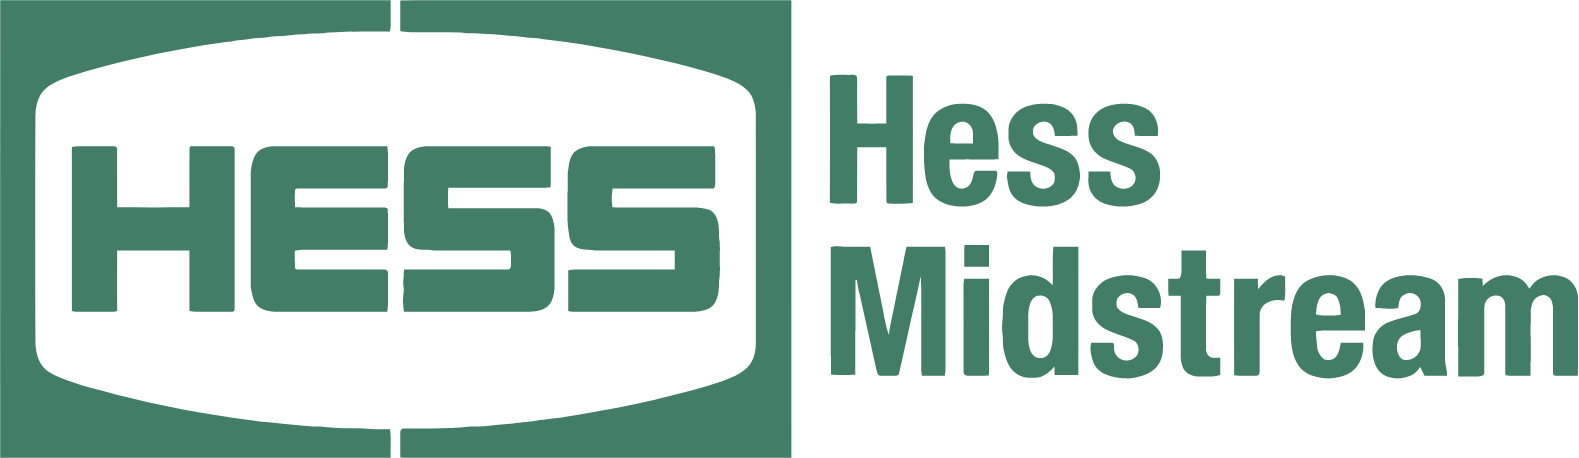 Hess Midstream logo large (transparent PNG)